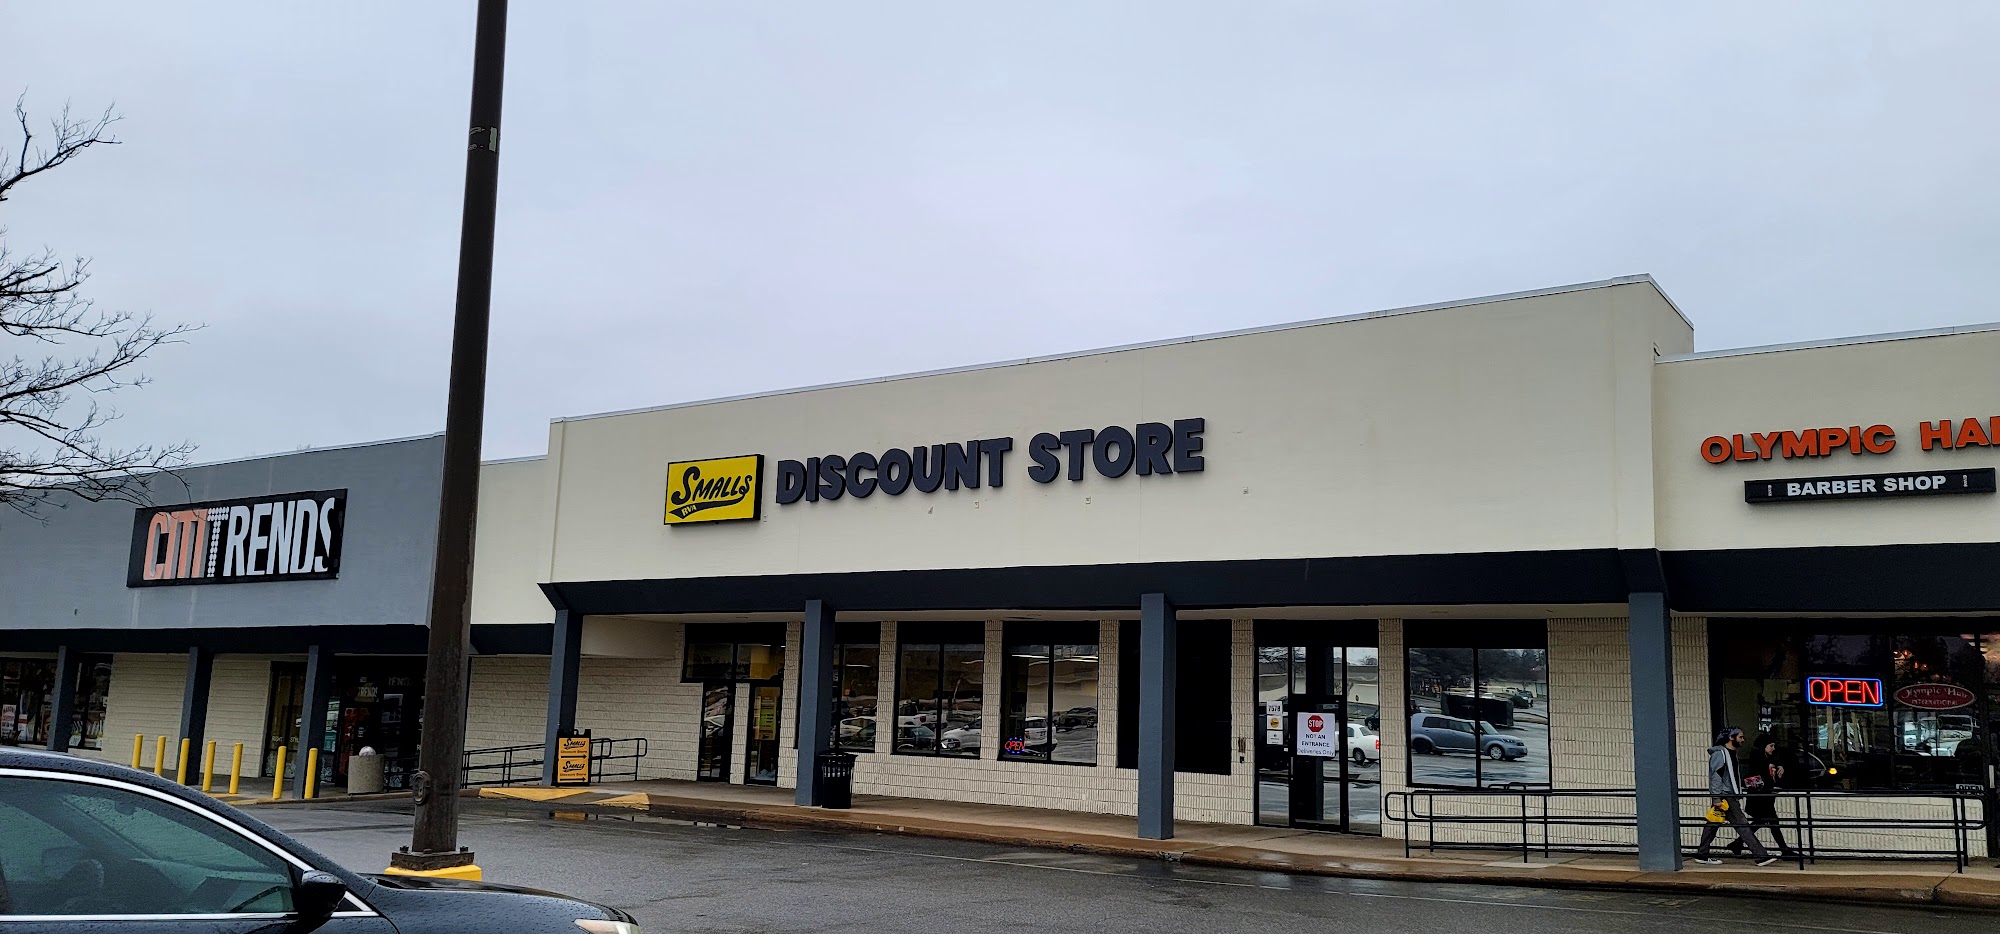 Smalls Discount Store